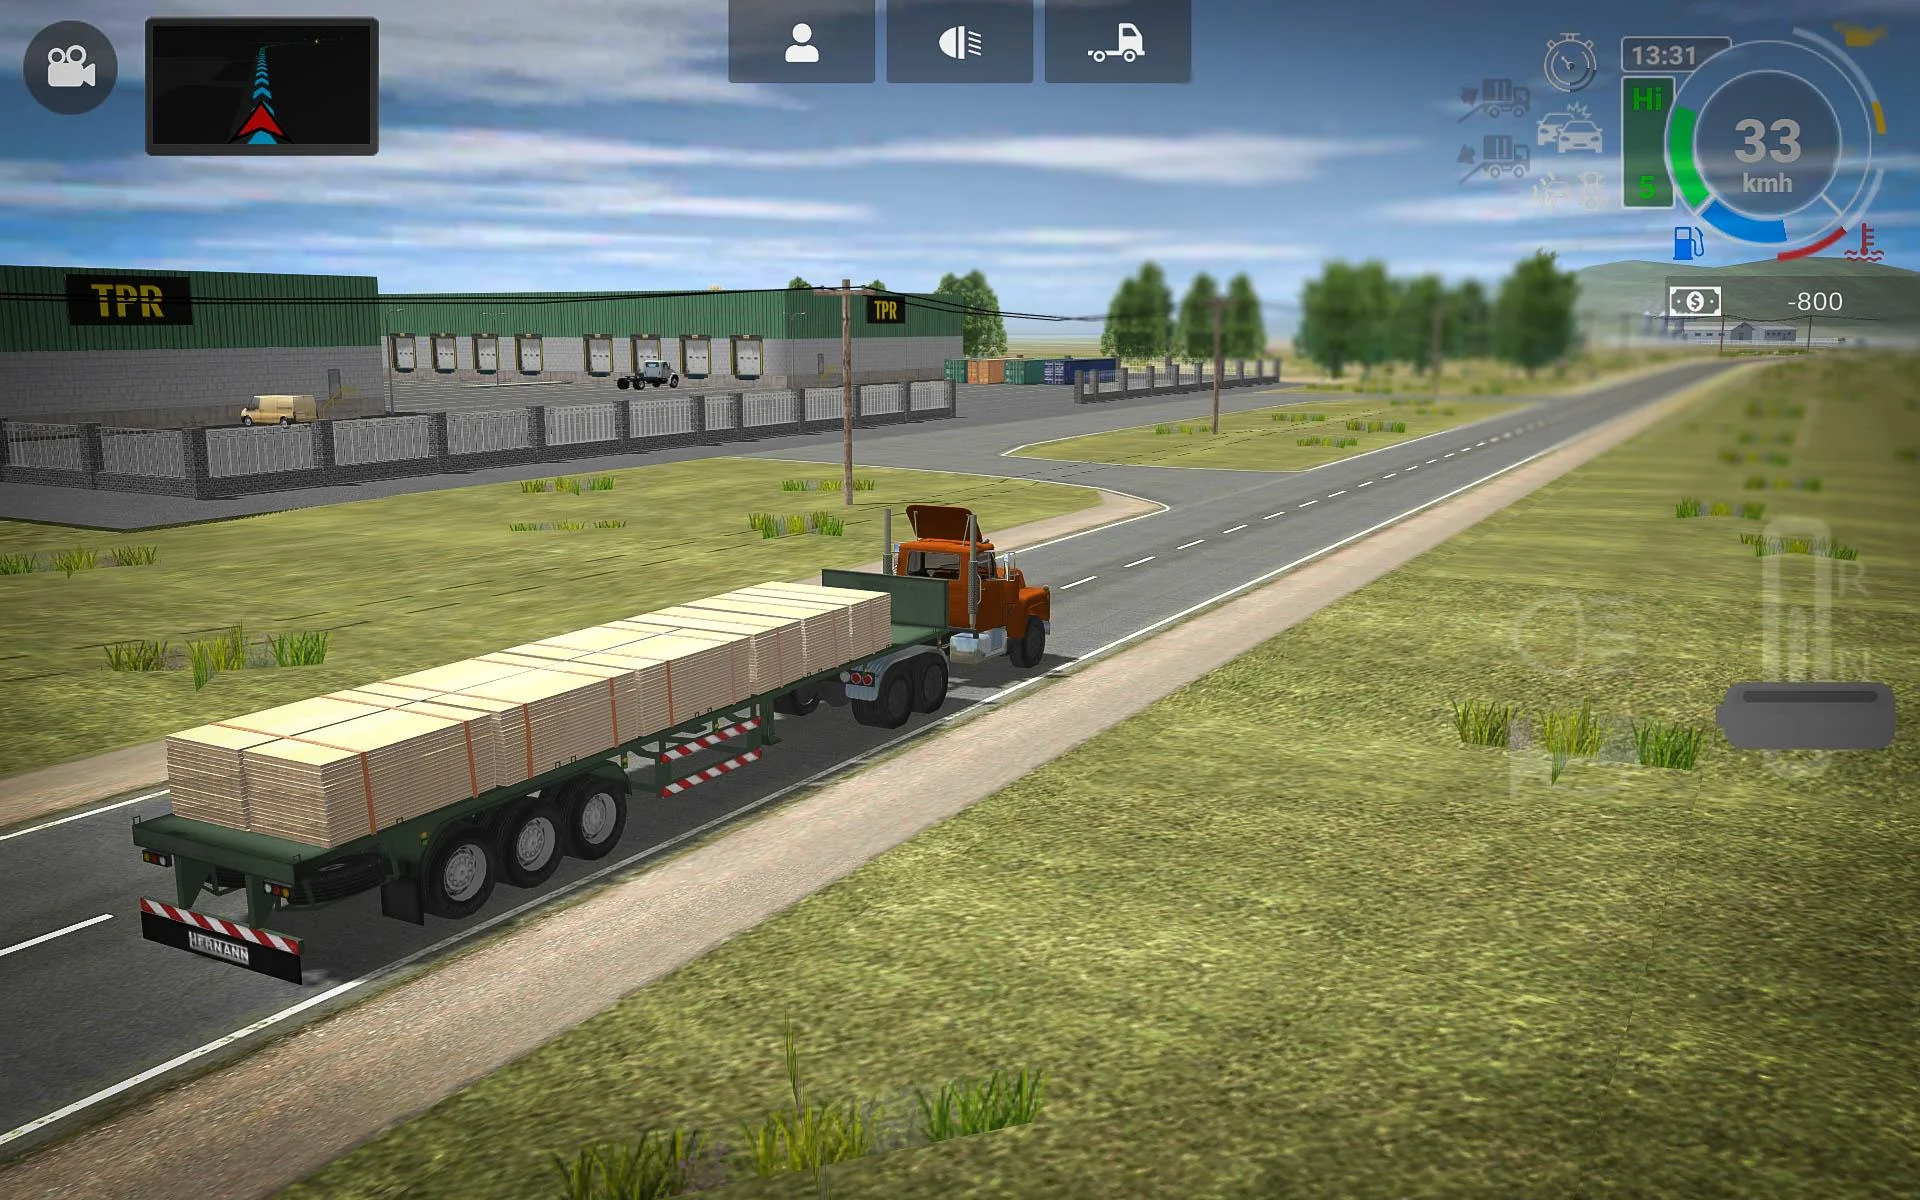 Grand Truck Simulator 2 v1.0.34f3 MOD APK (Money/License)